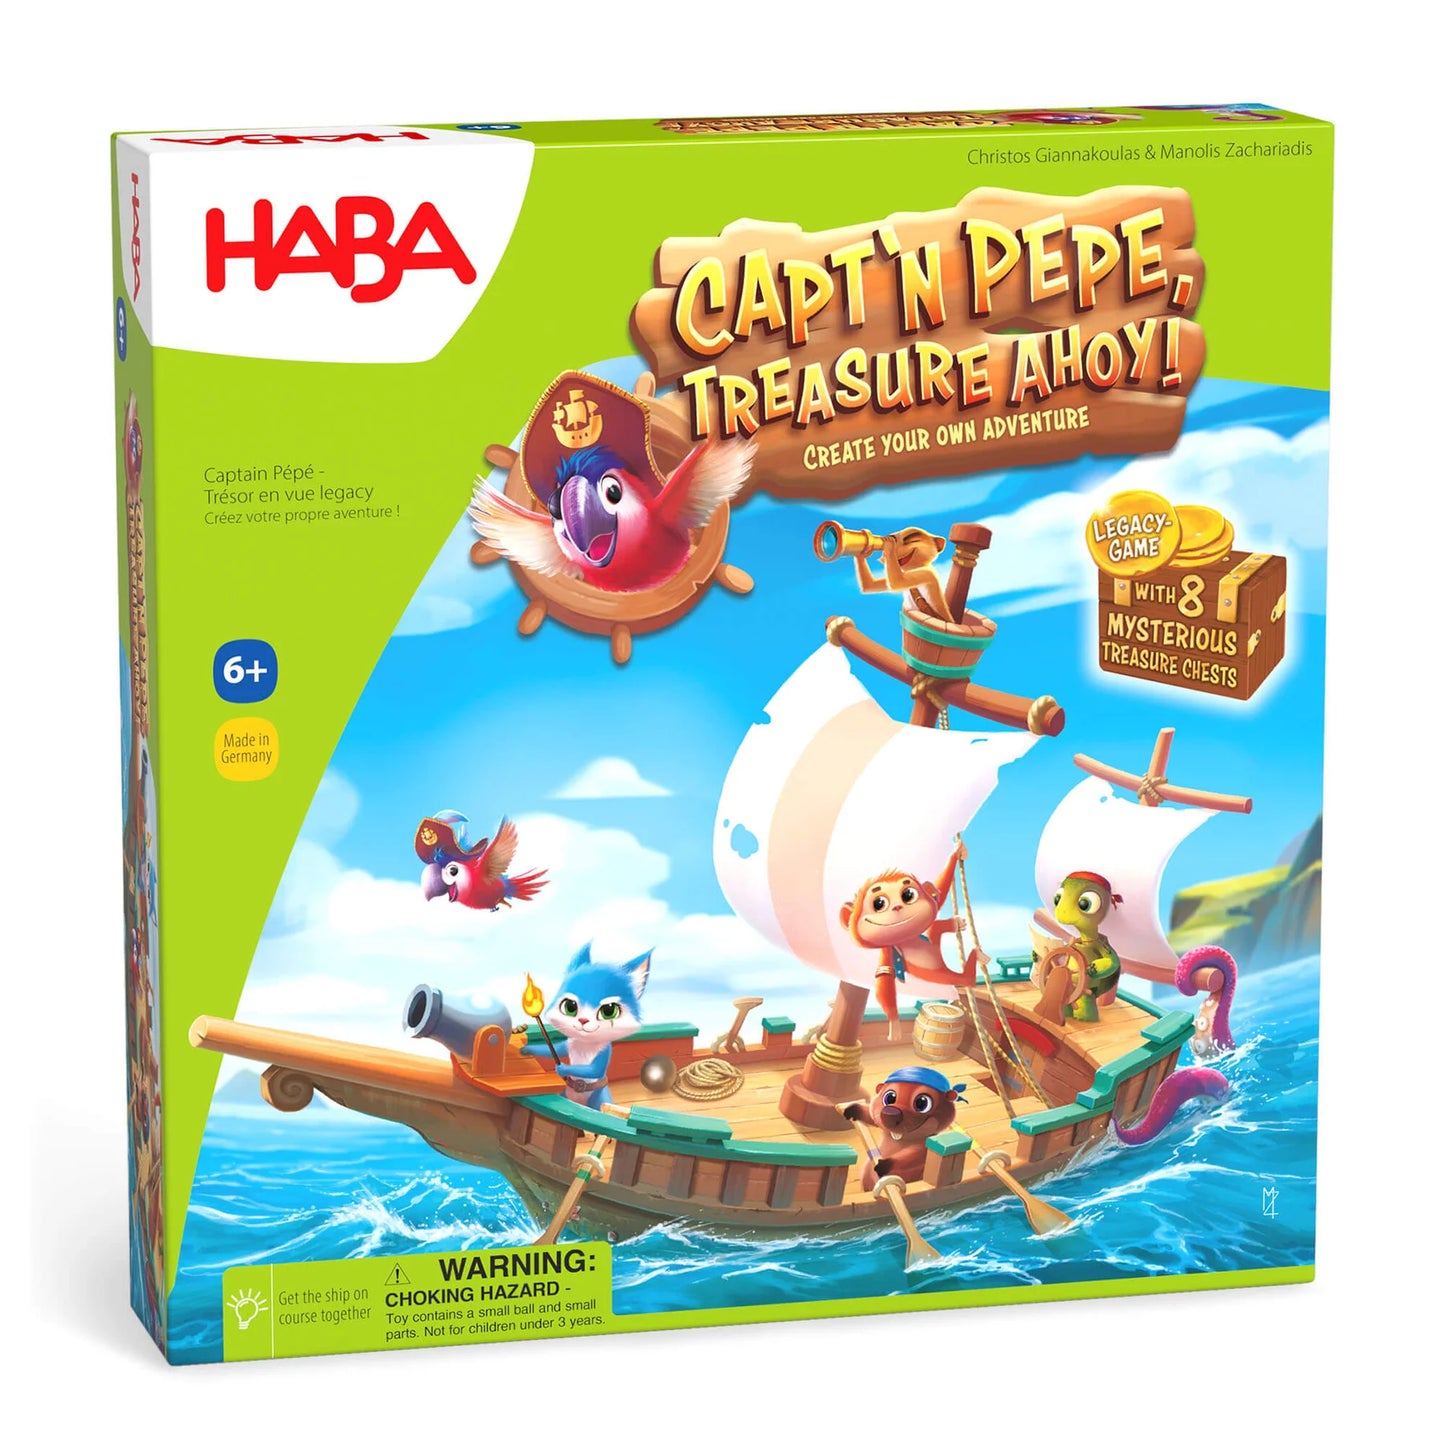 HABA - Capt'n Pepe: Treasure Ahoy!